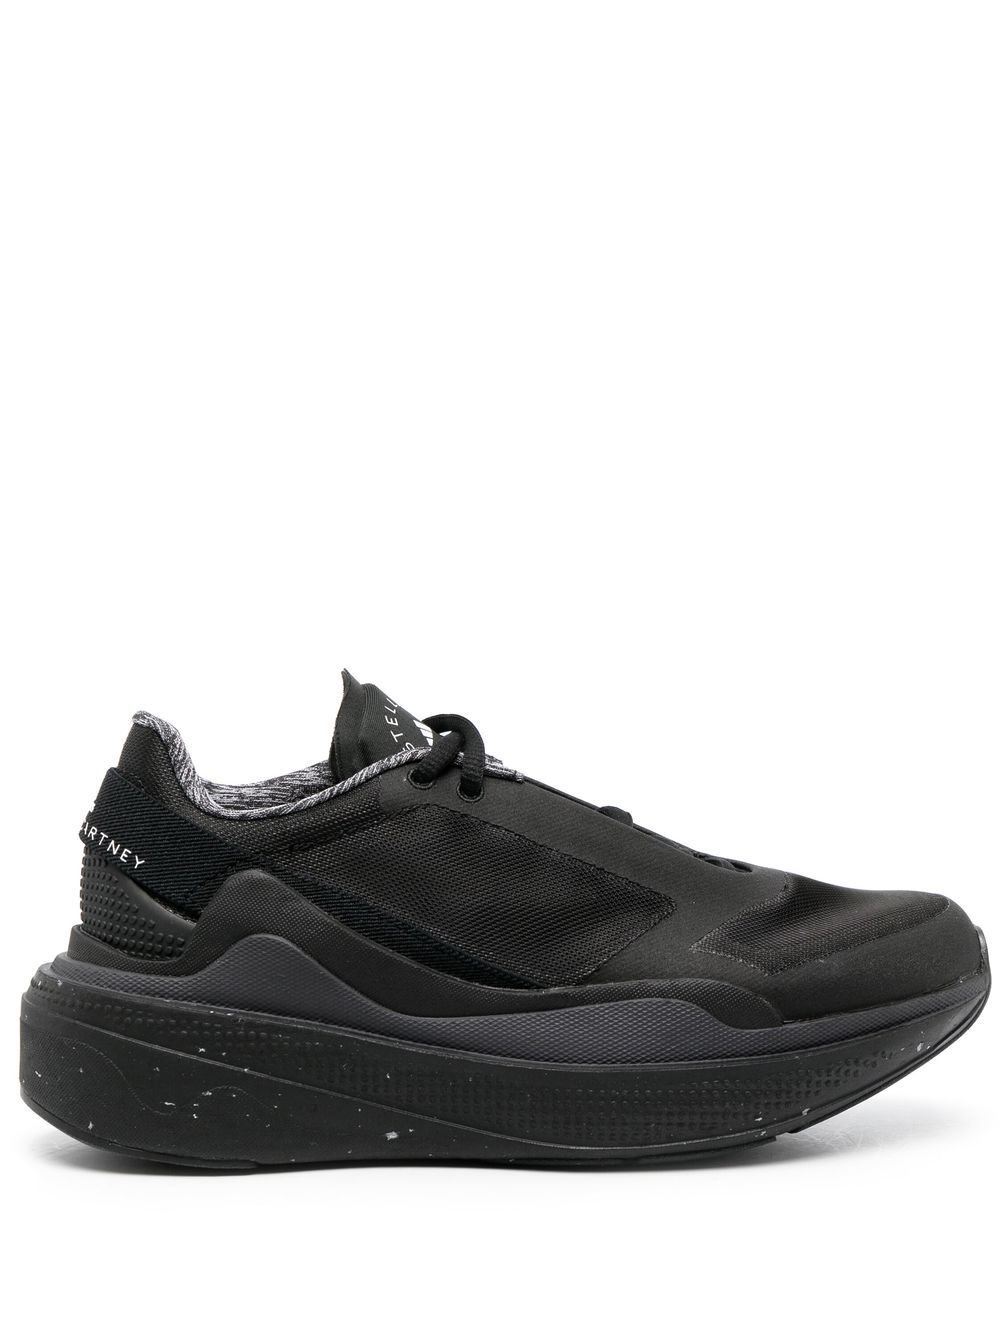 adidas by Stella McCartney Earthlight sneakers Black 1